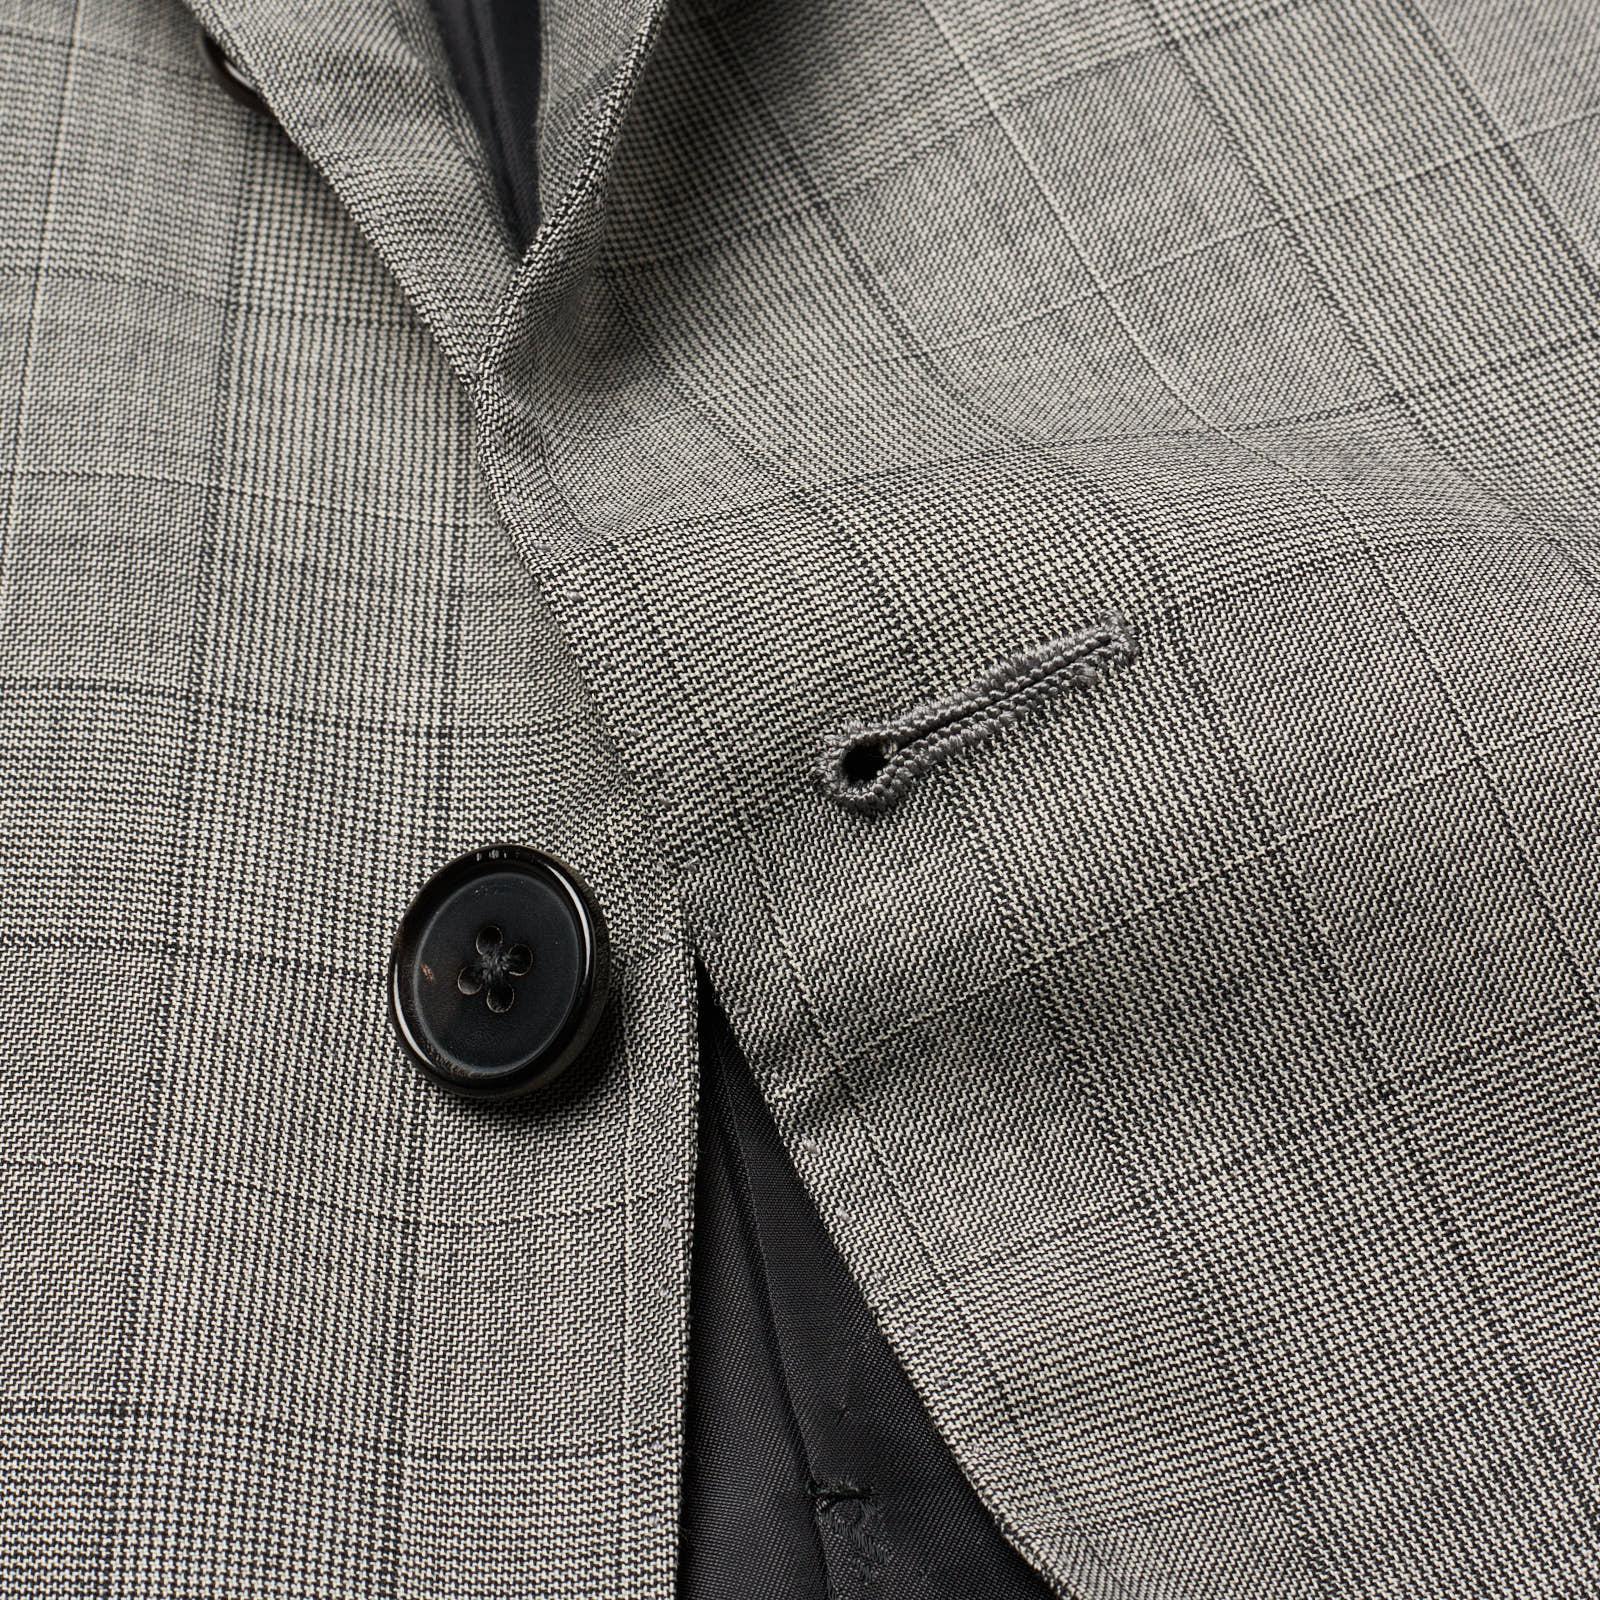 D'AVENZA for Vannucci  Handmade Gray Plaid Wool Super 120's Suit EU 54 NEW US 44